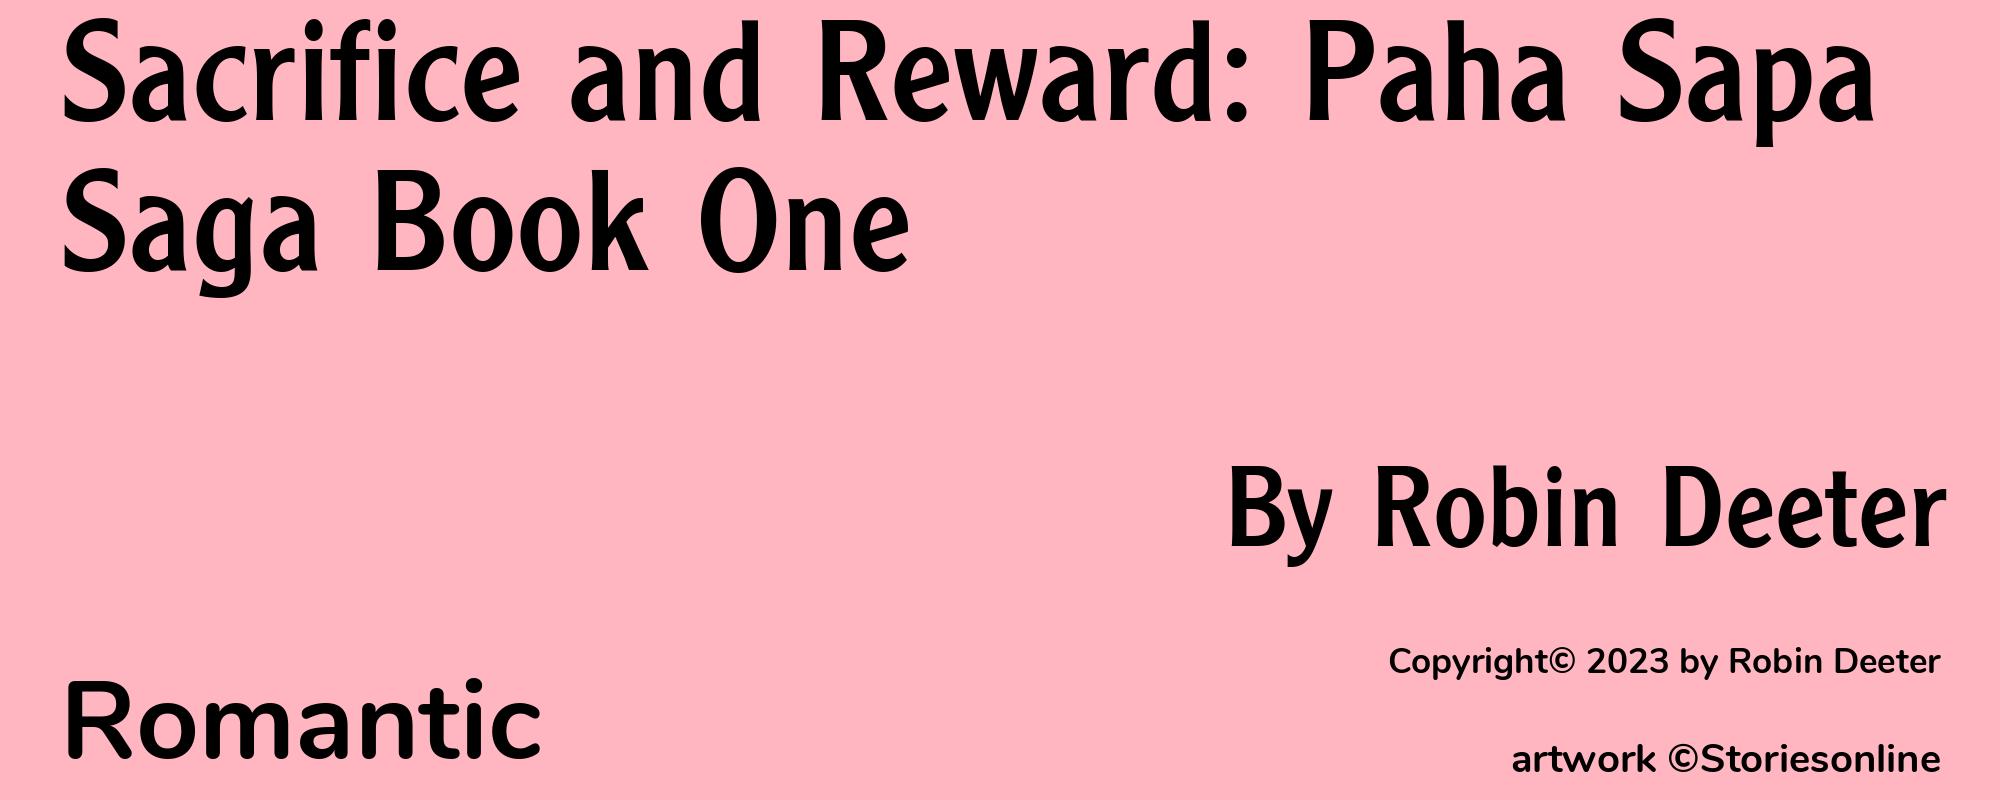 Sacrifice and Reward: Paha Sapa Saga Book One - Cover